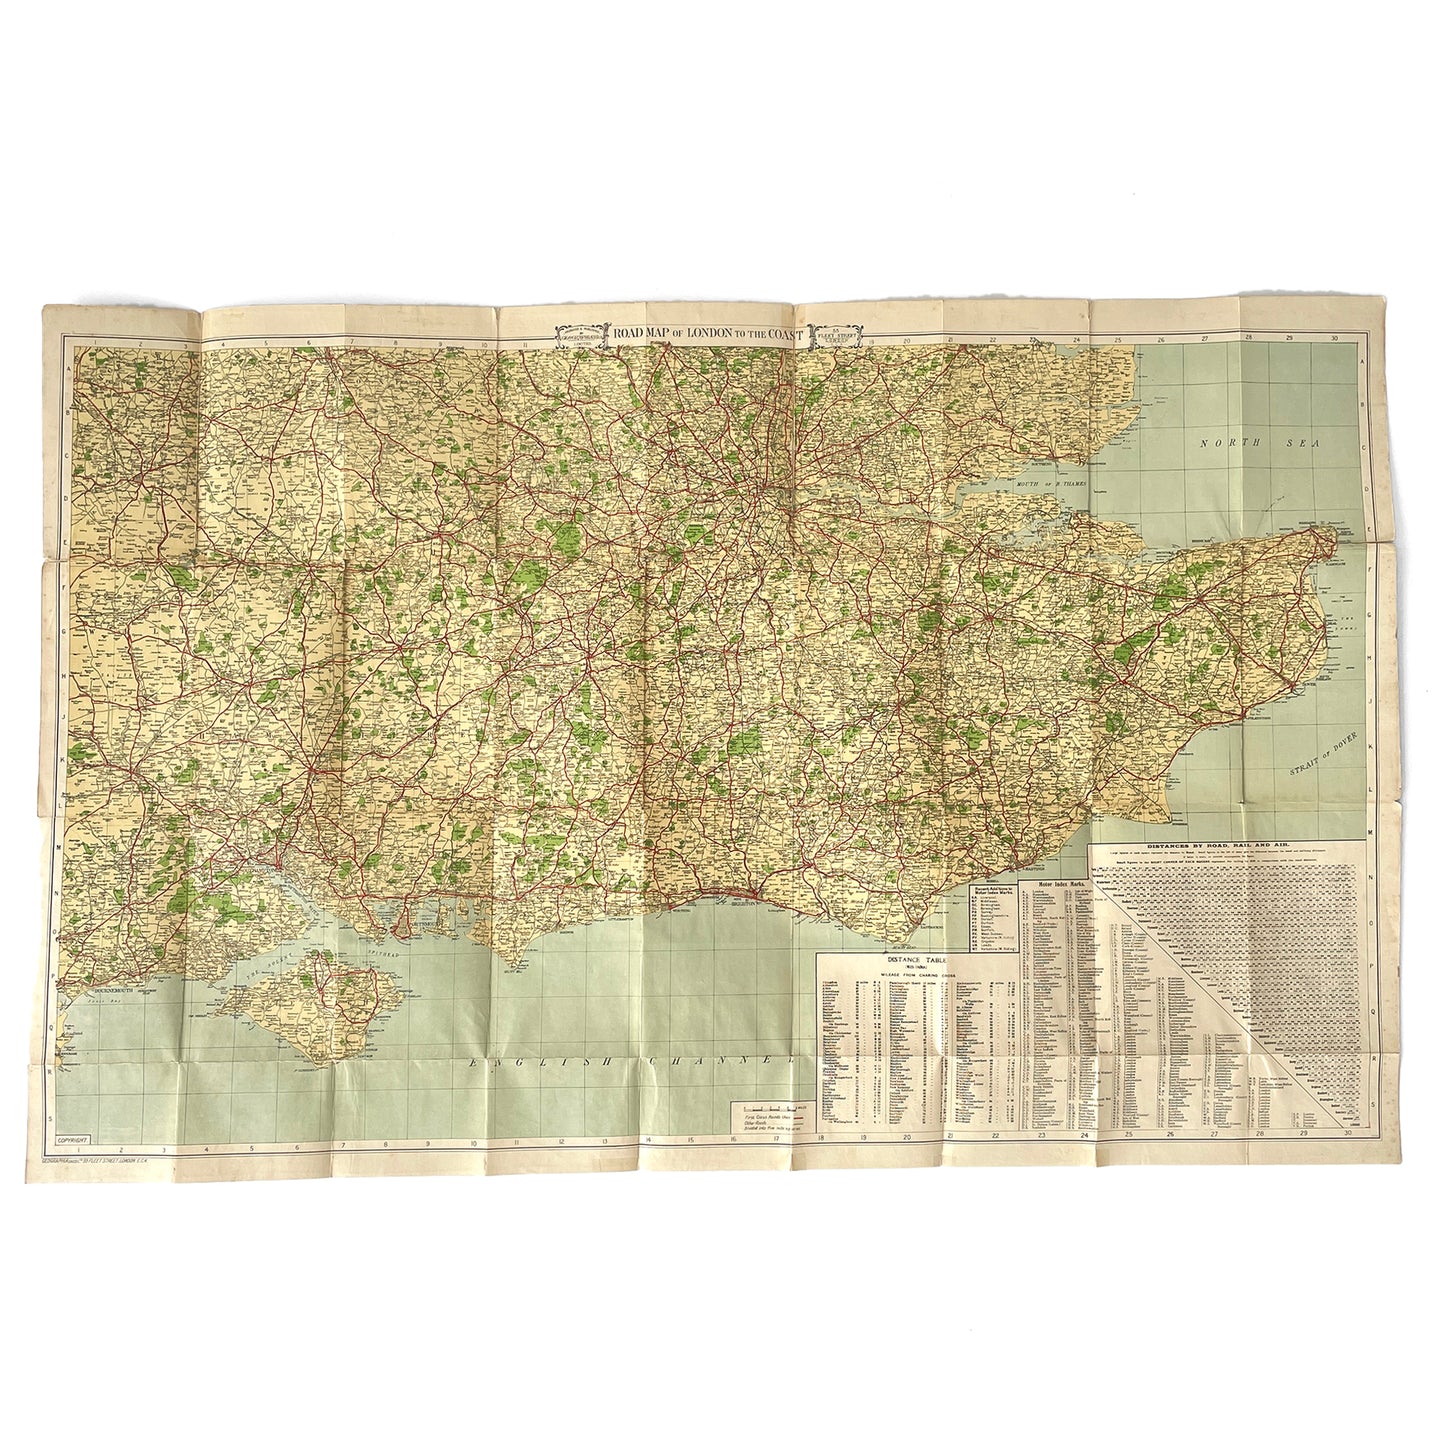 1923 Geographia Road Map of London to the Coast - Sukie